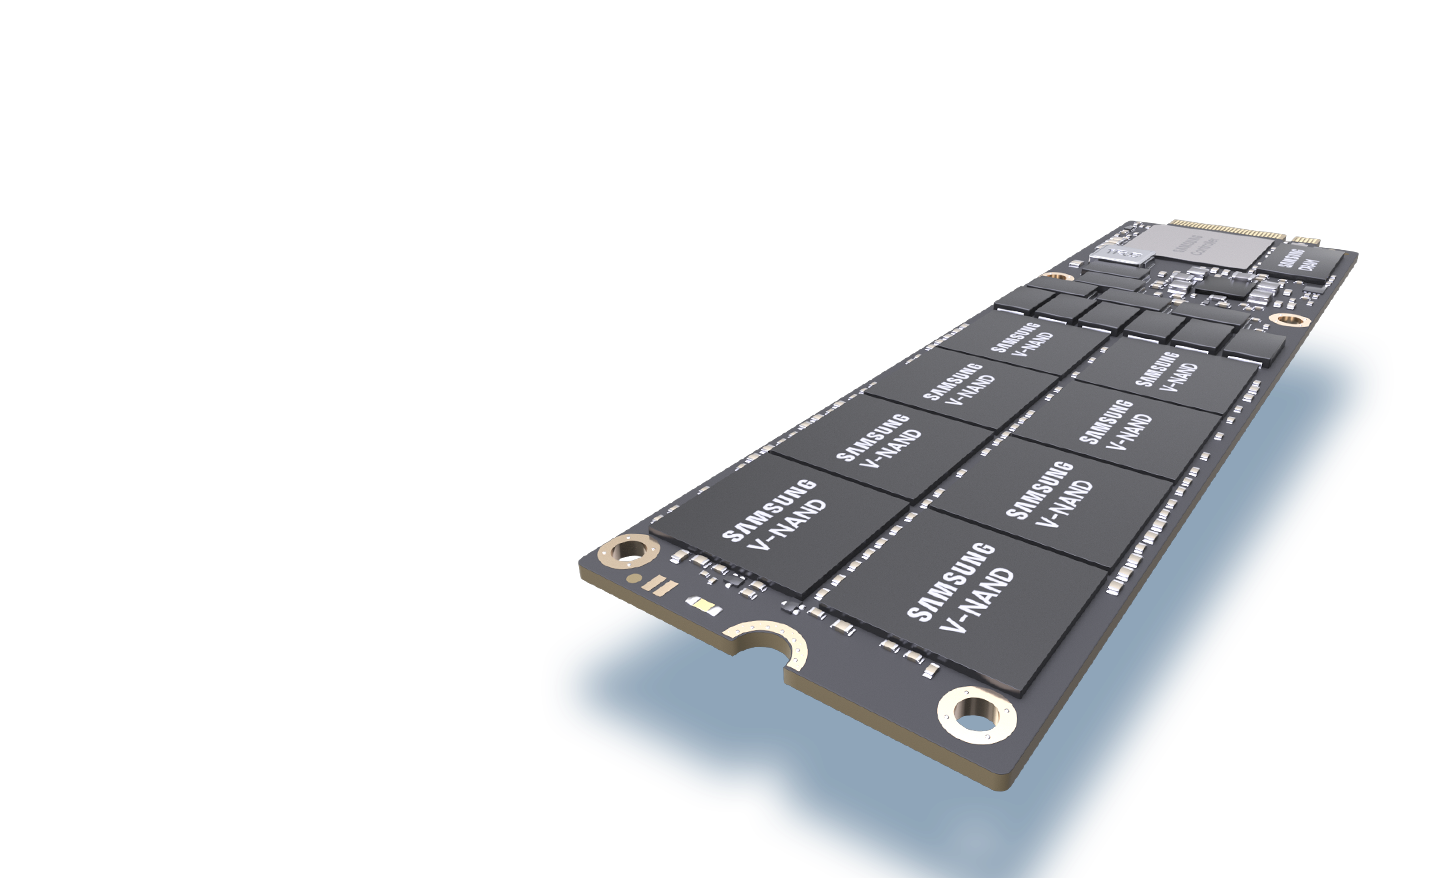 NF1 SSD | Samsung Semiconductor Global Website